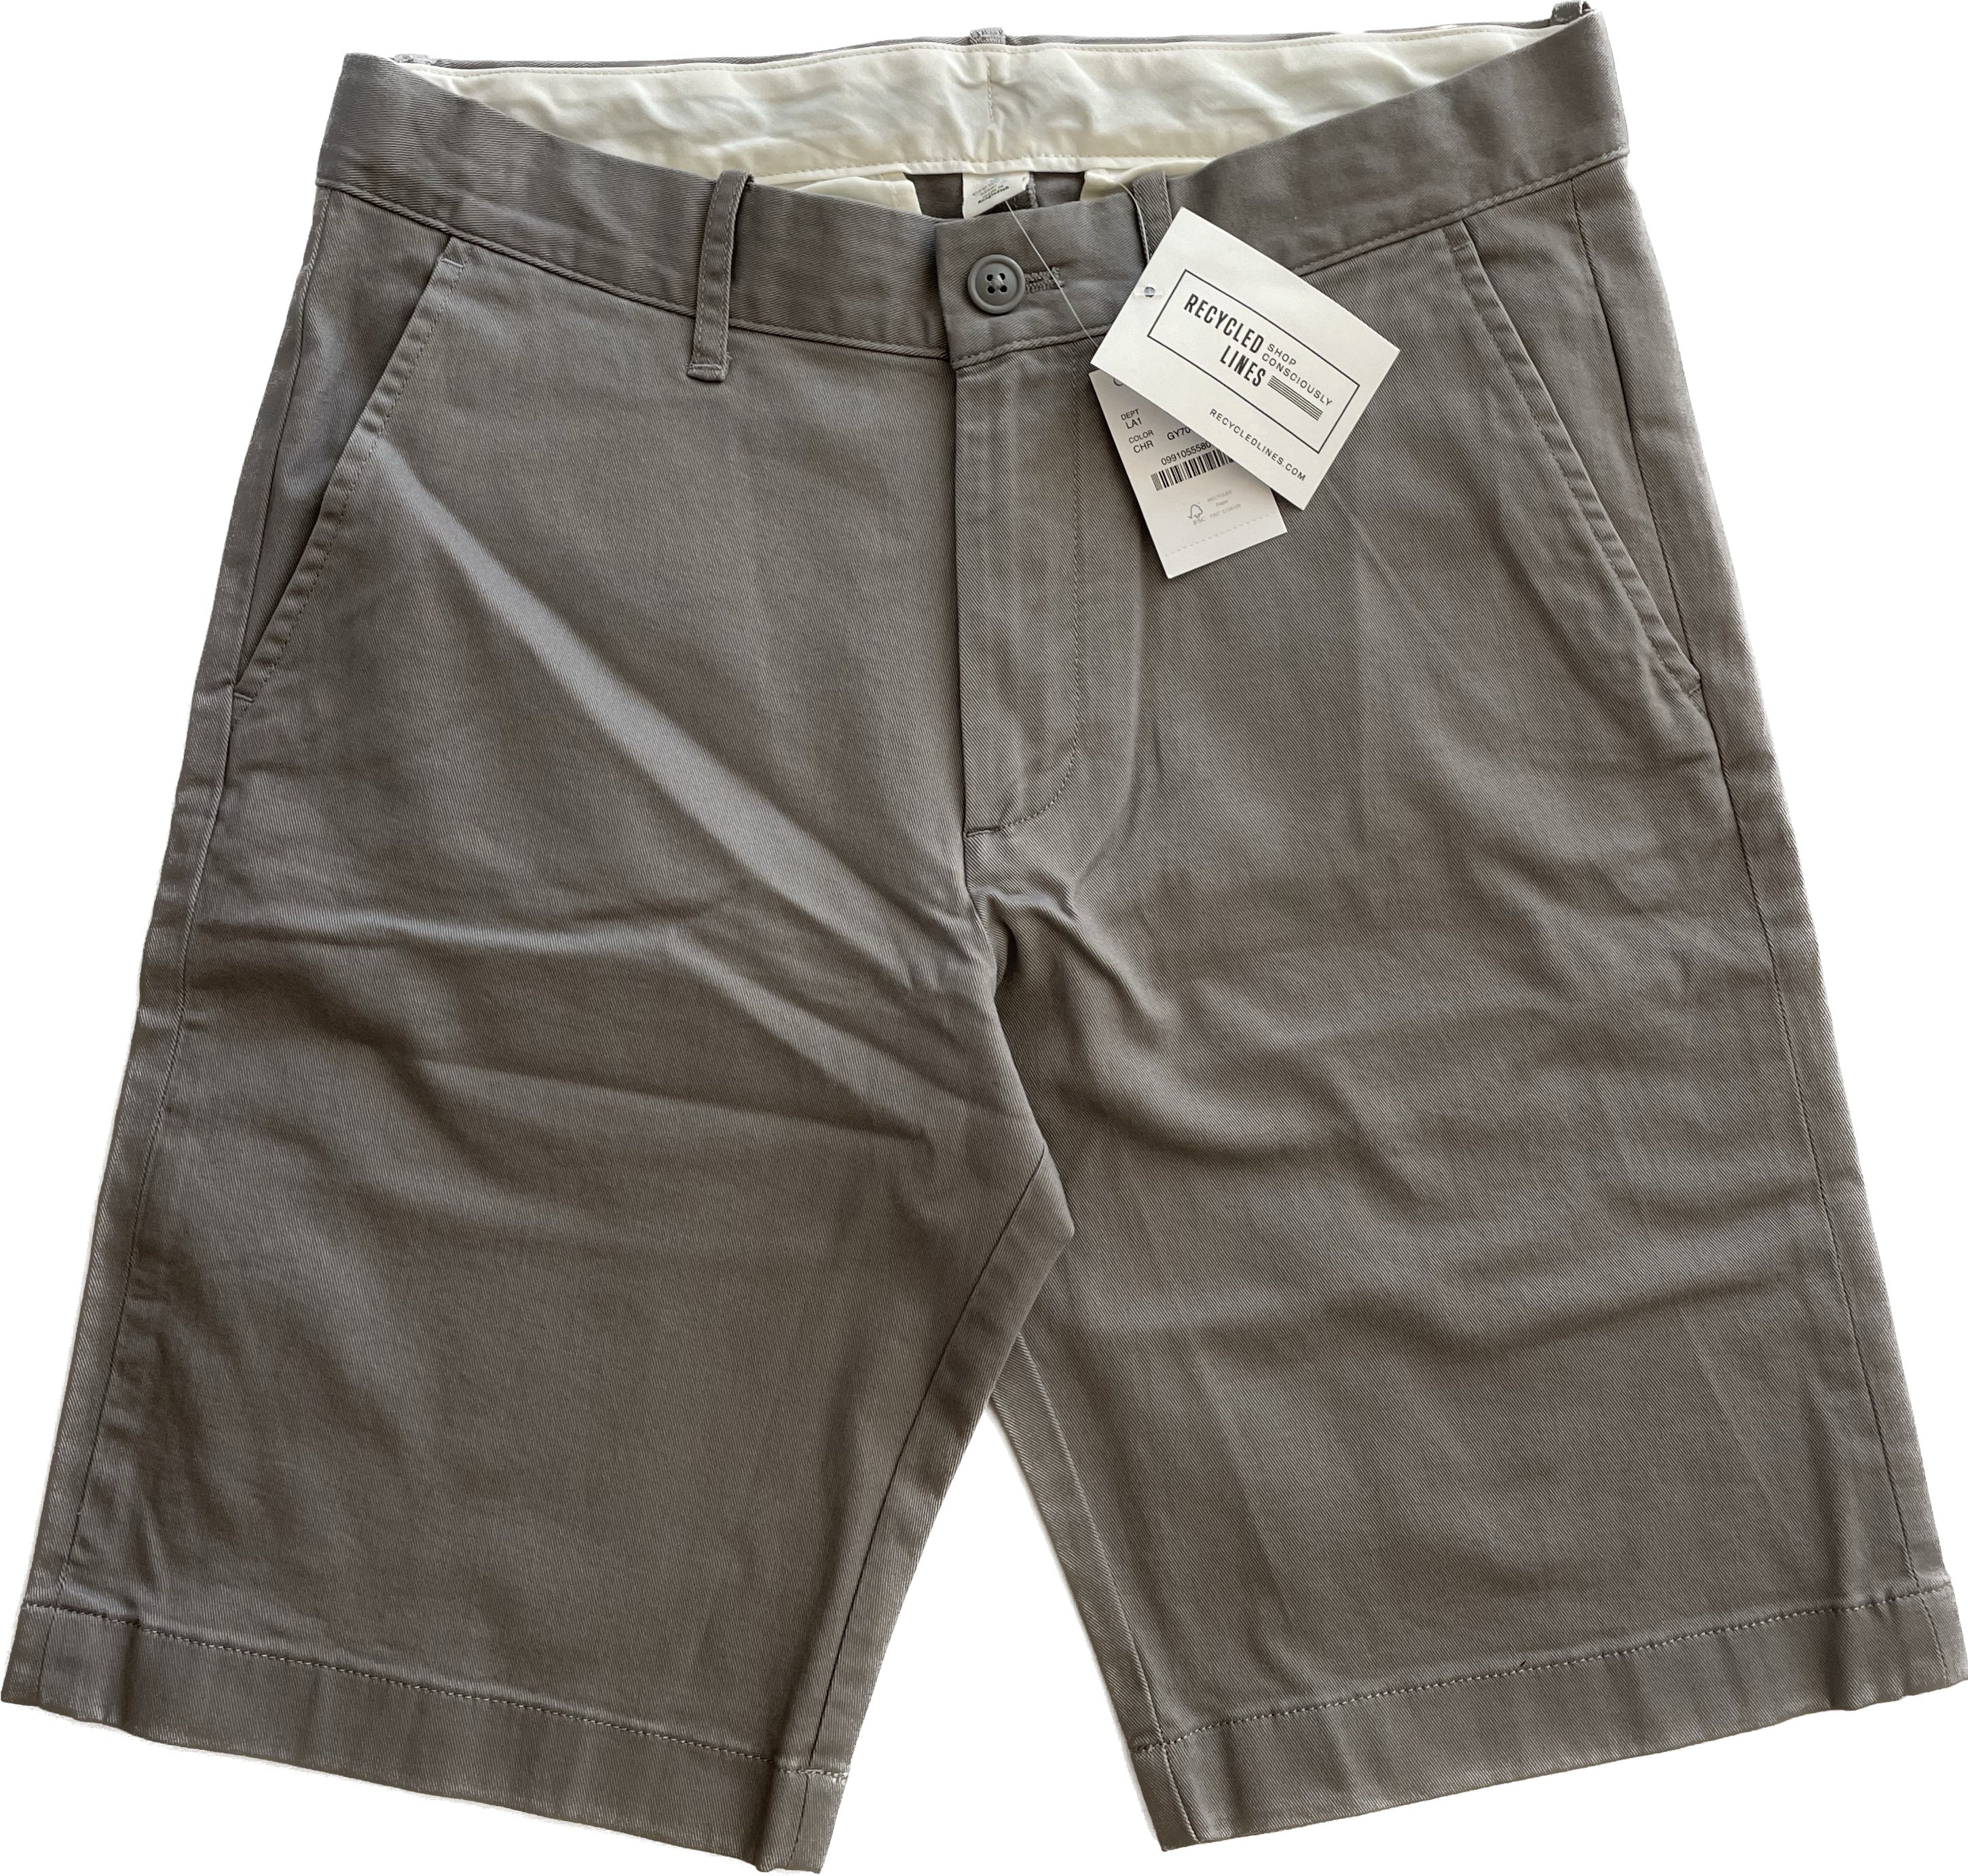 Crewcuts NWT Shorts, Gray Boys Size 16